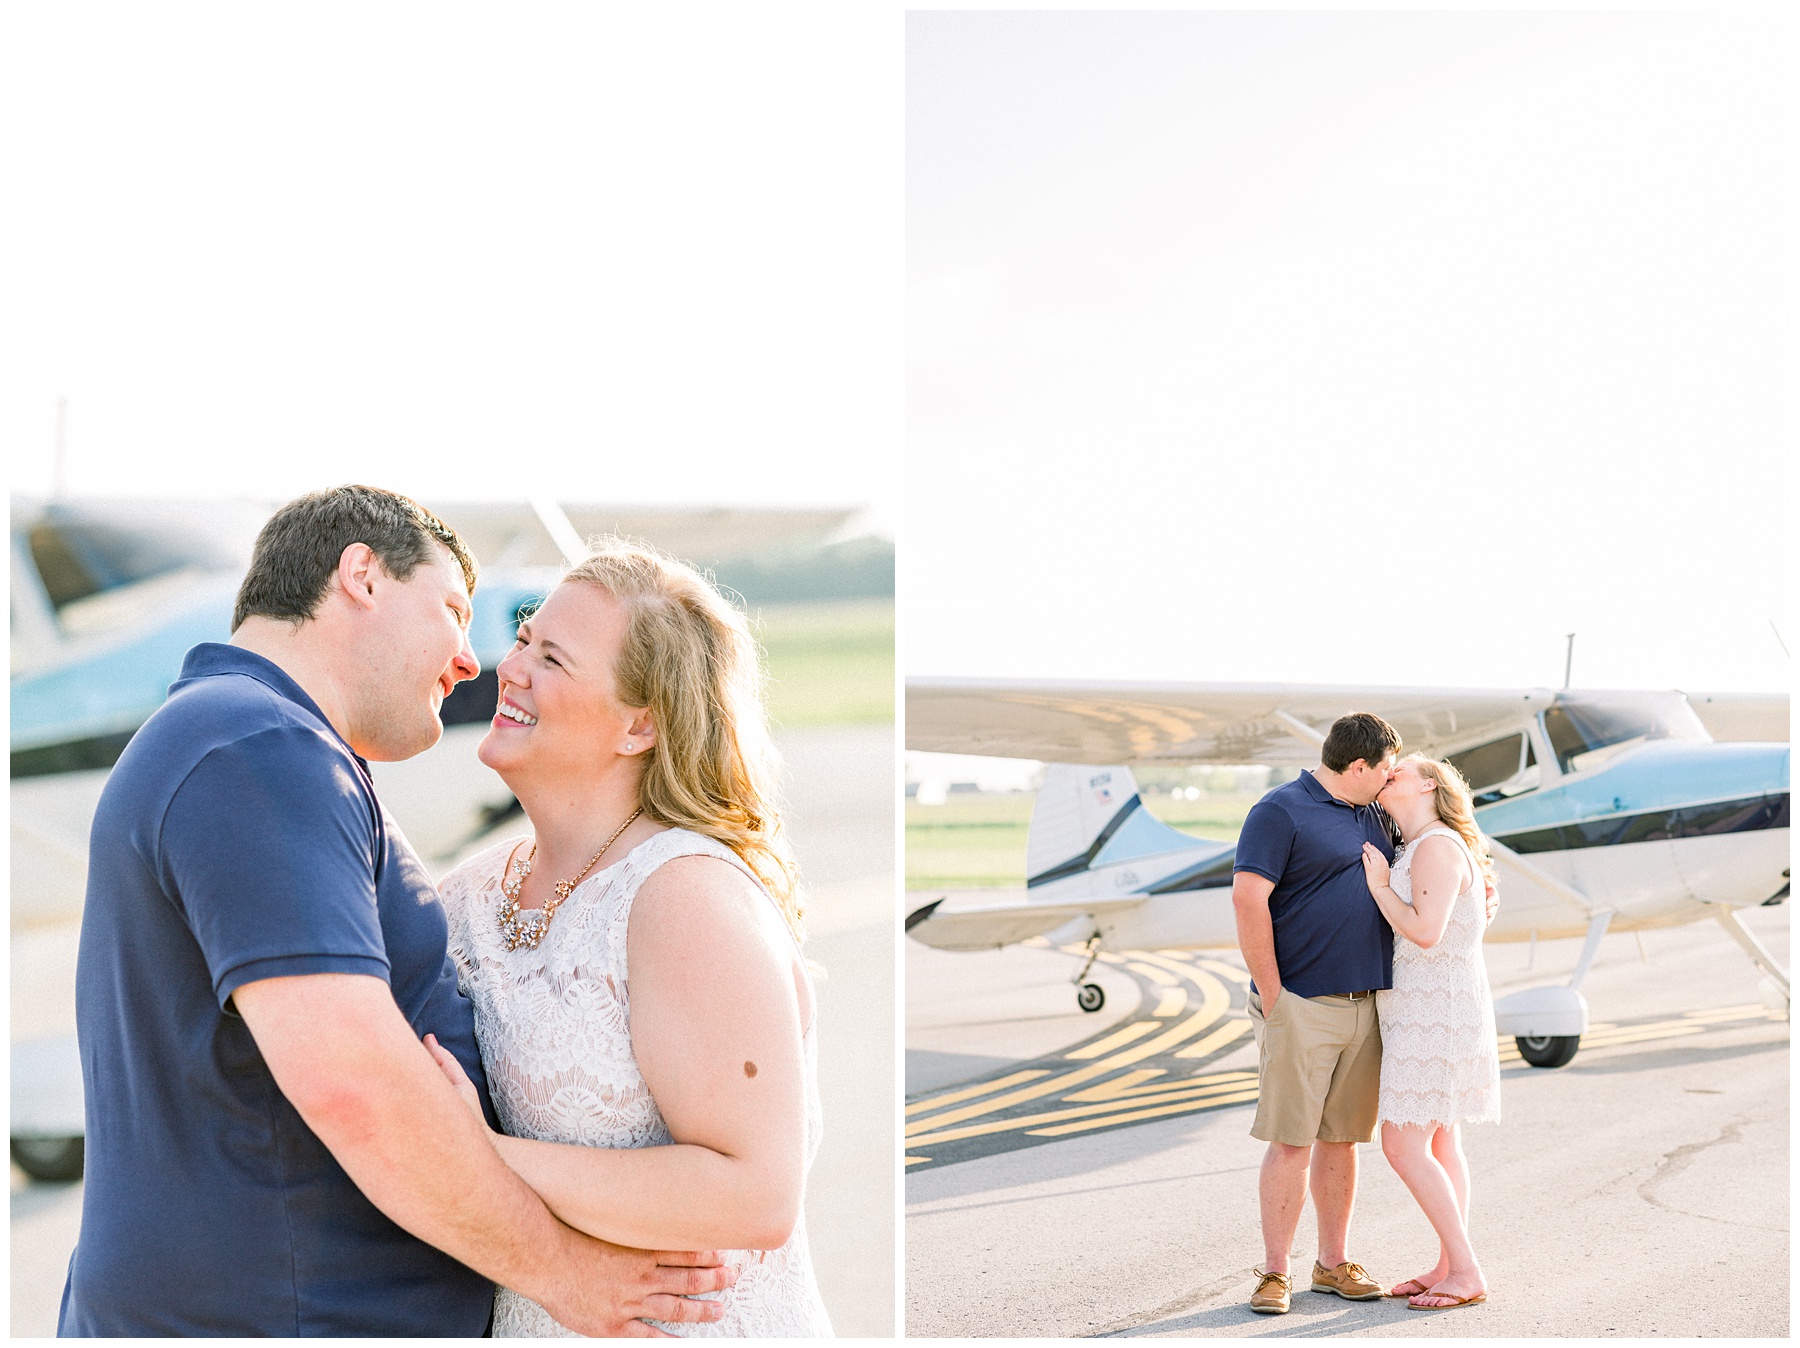 Findlay Airport Airplane Engagement Session. Columbus Wedding Photographer